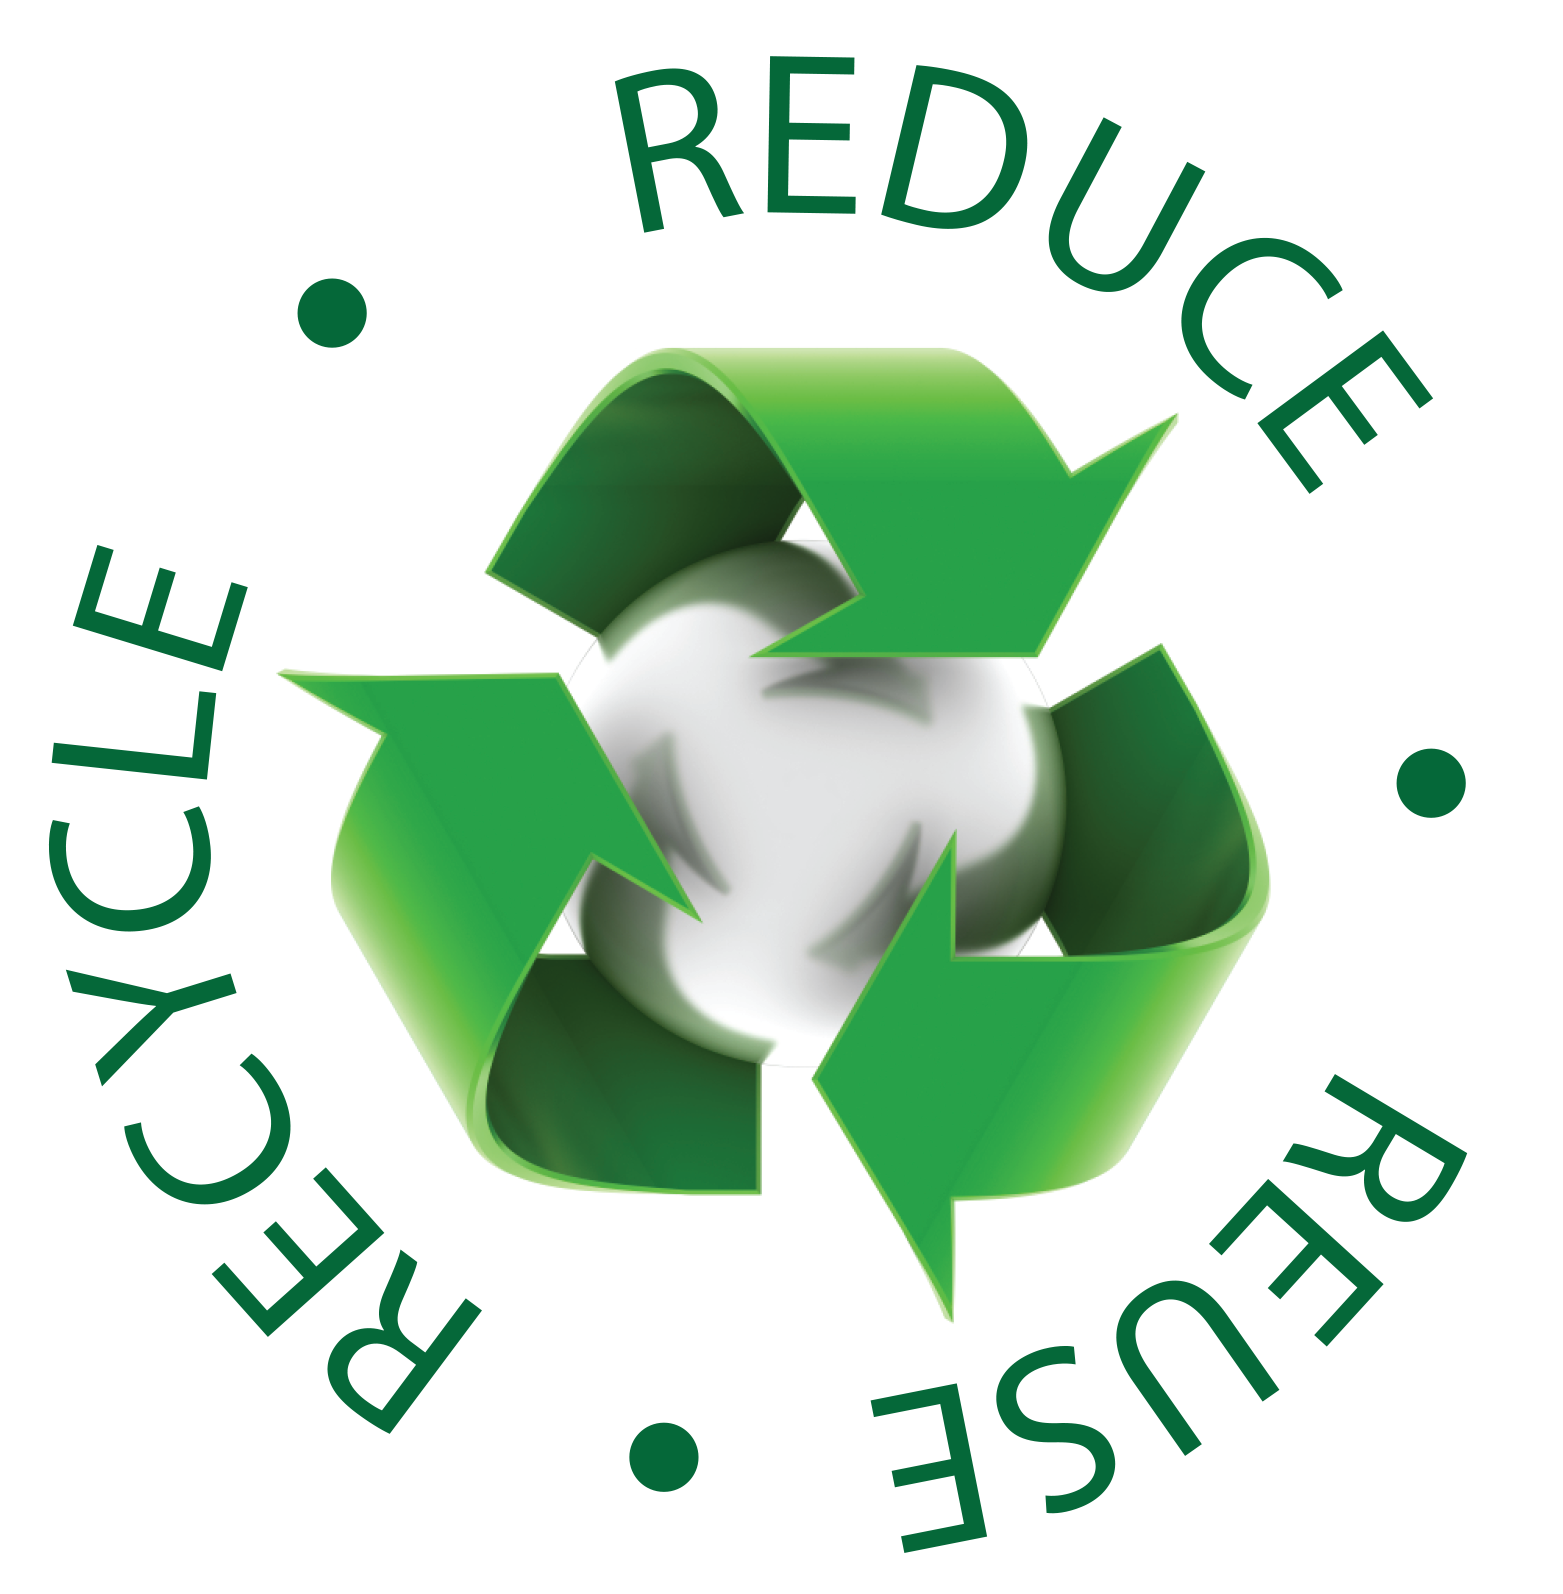 reduce reuse recycle | Bulldo